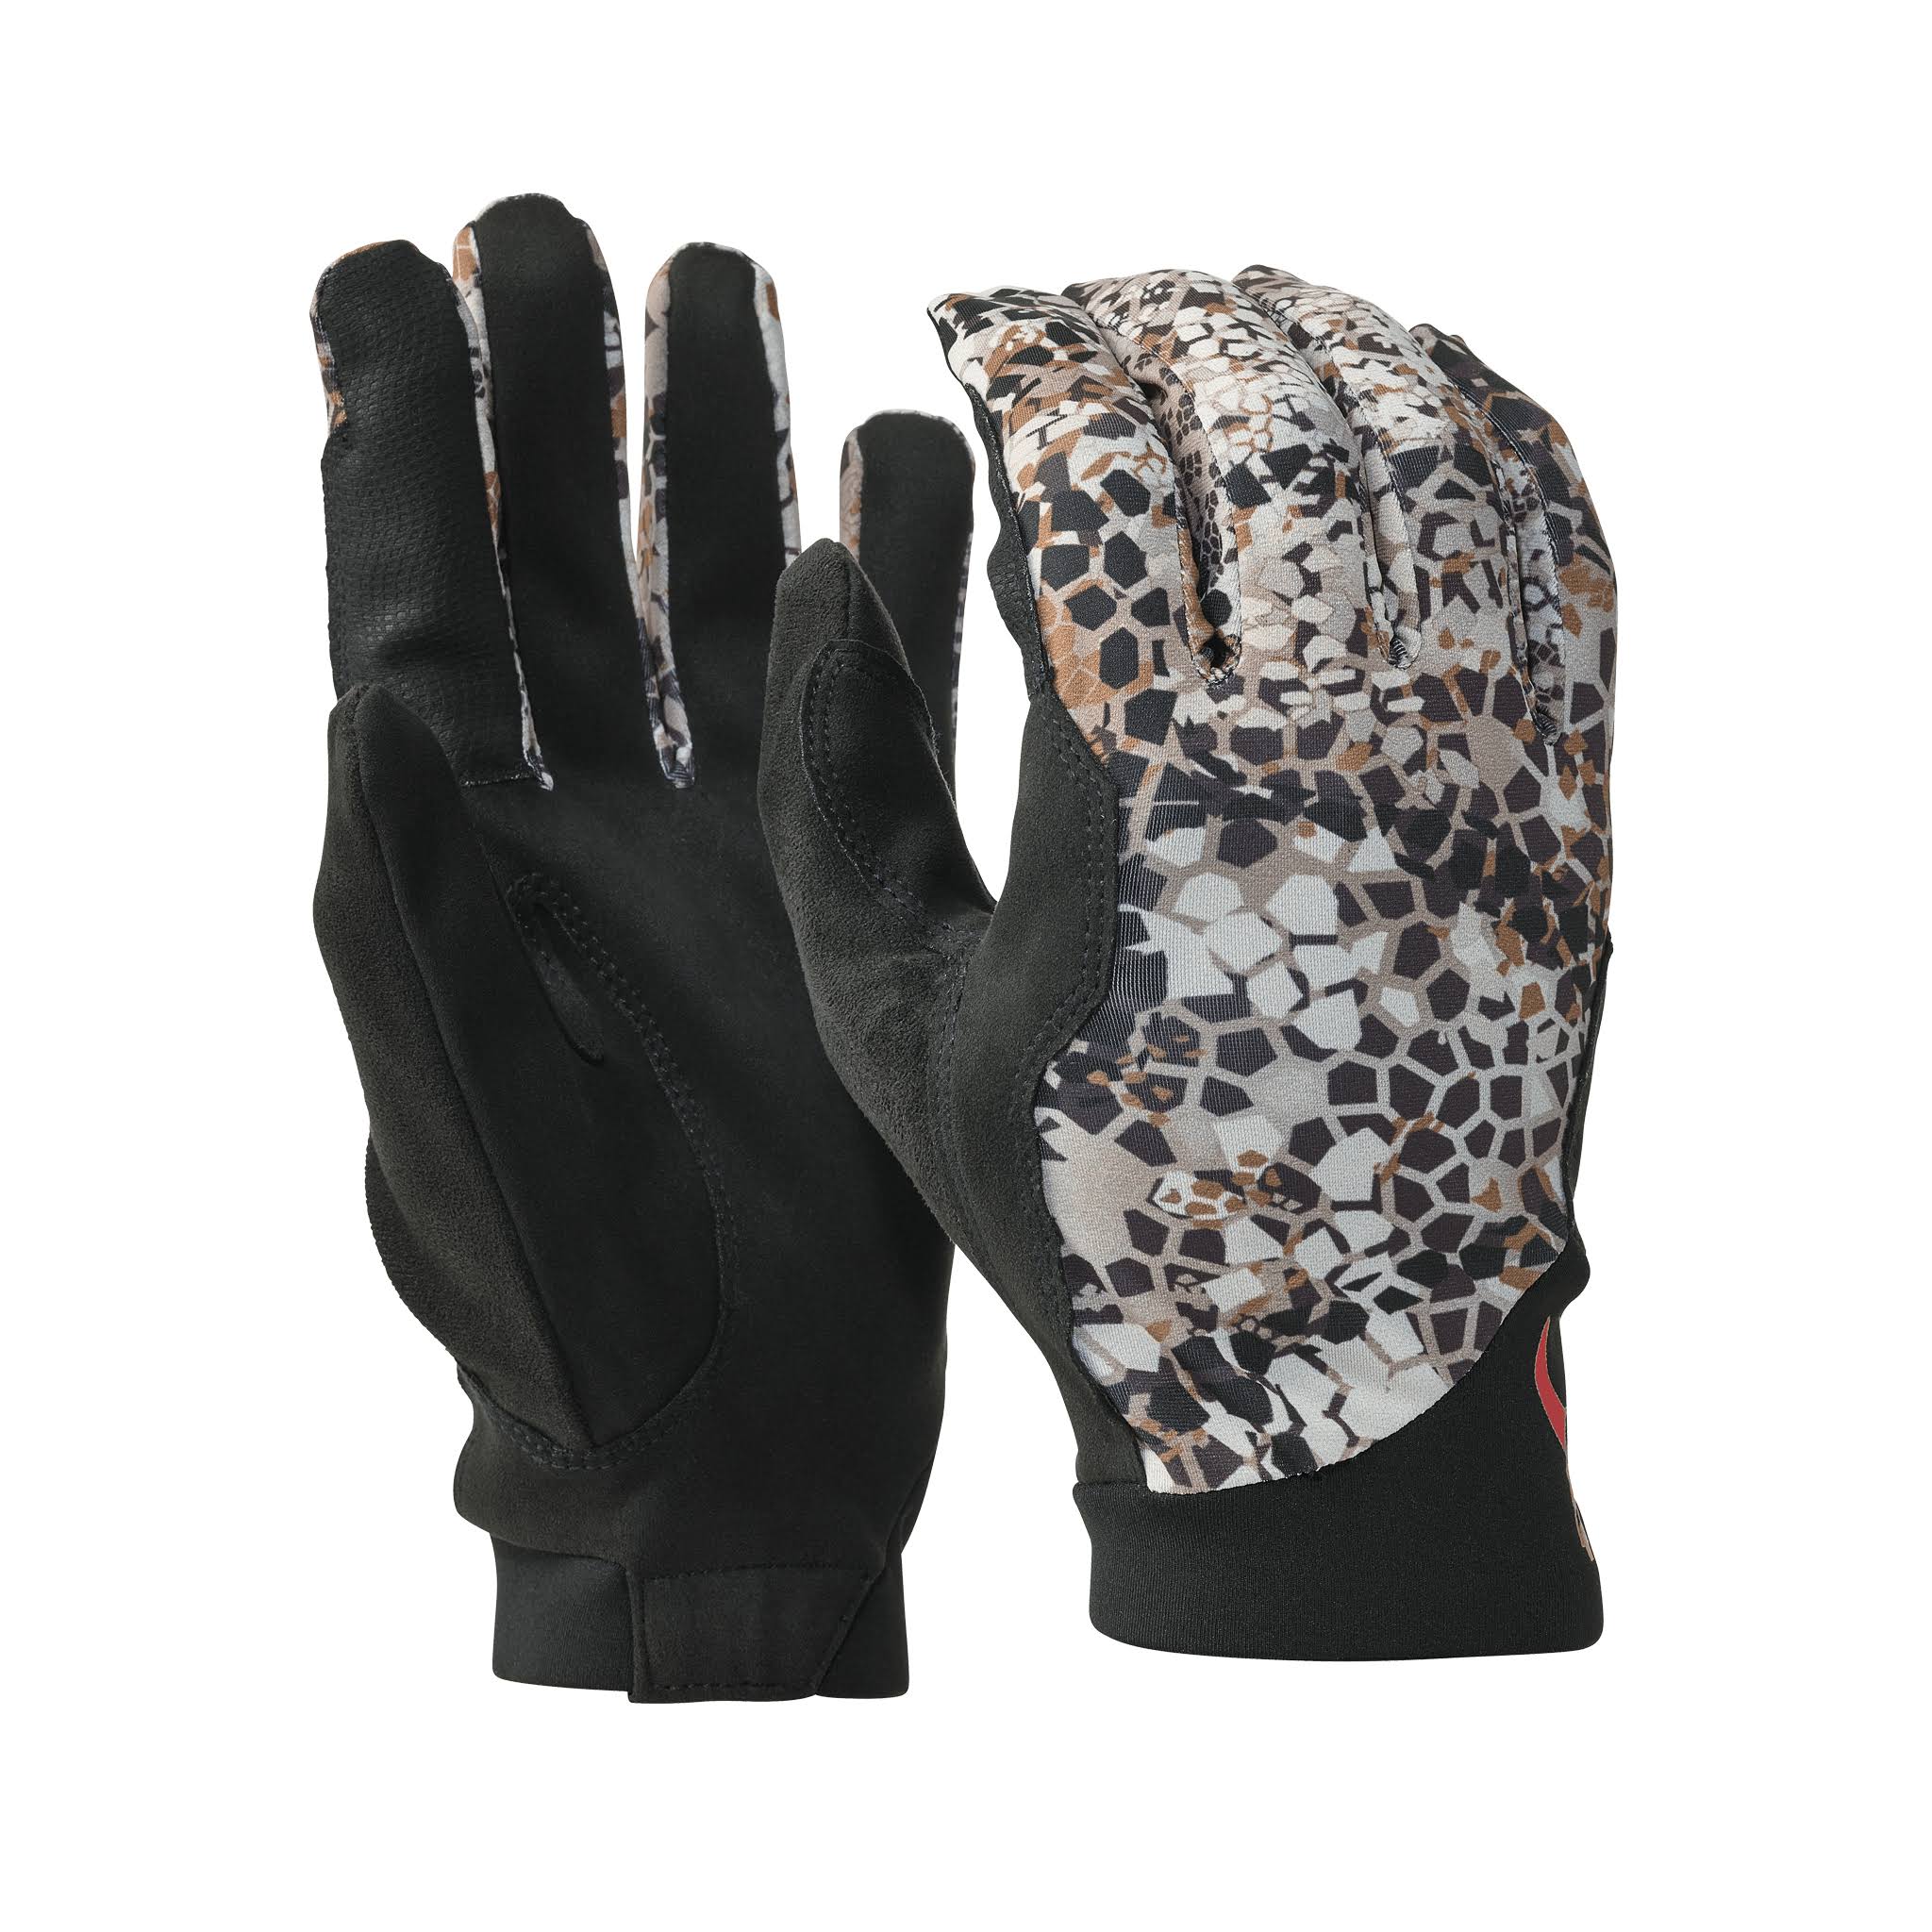 Flex Glove - Hunting Accessories | Badlands Gear x Large / Approach FX